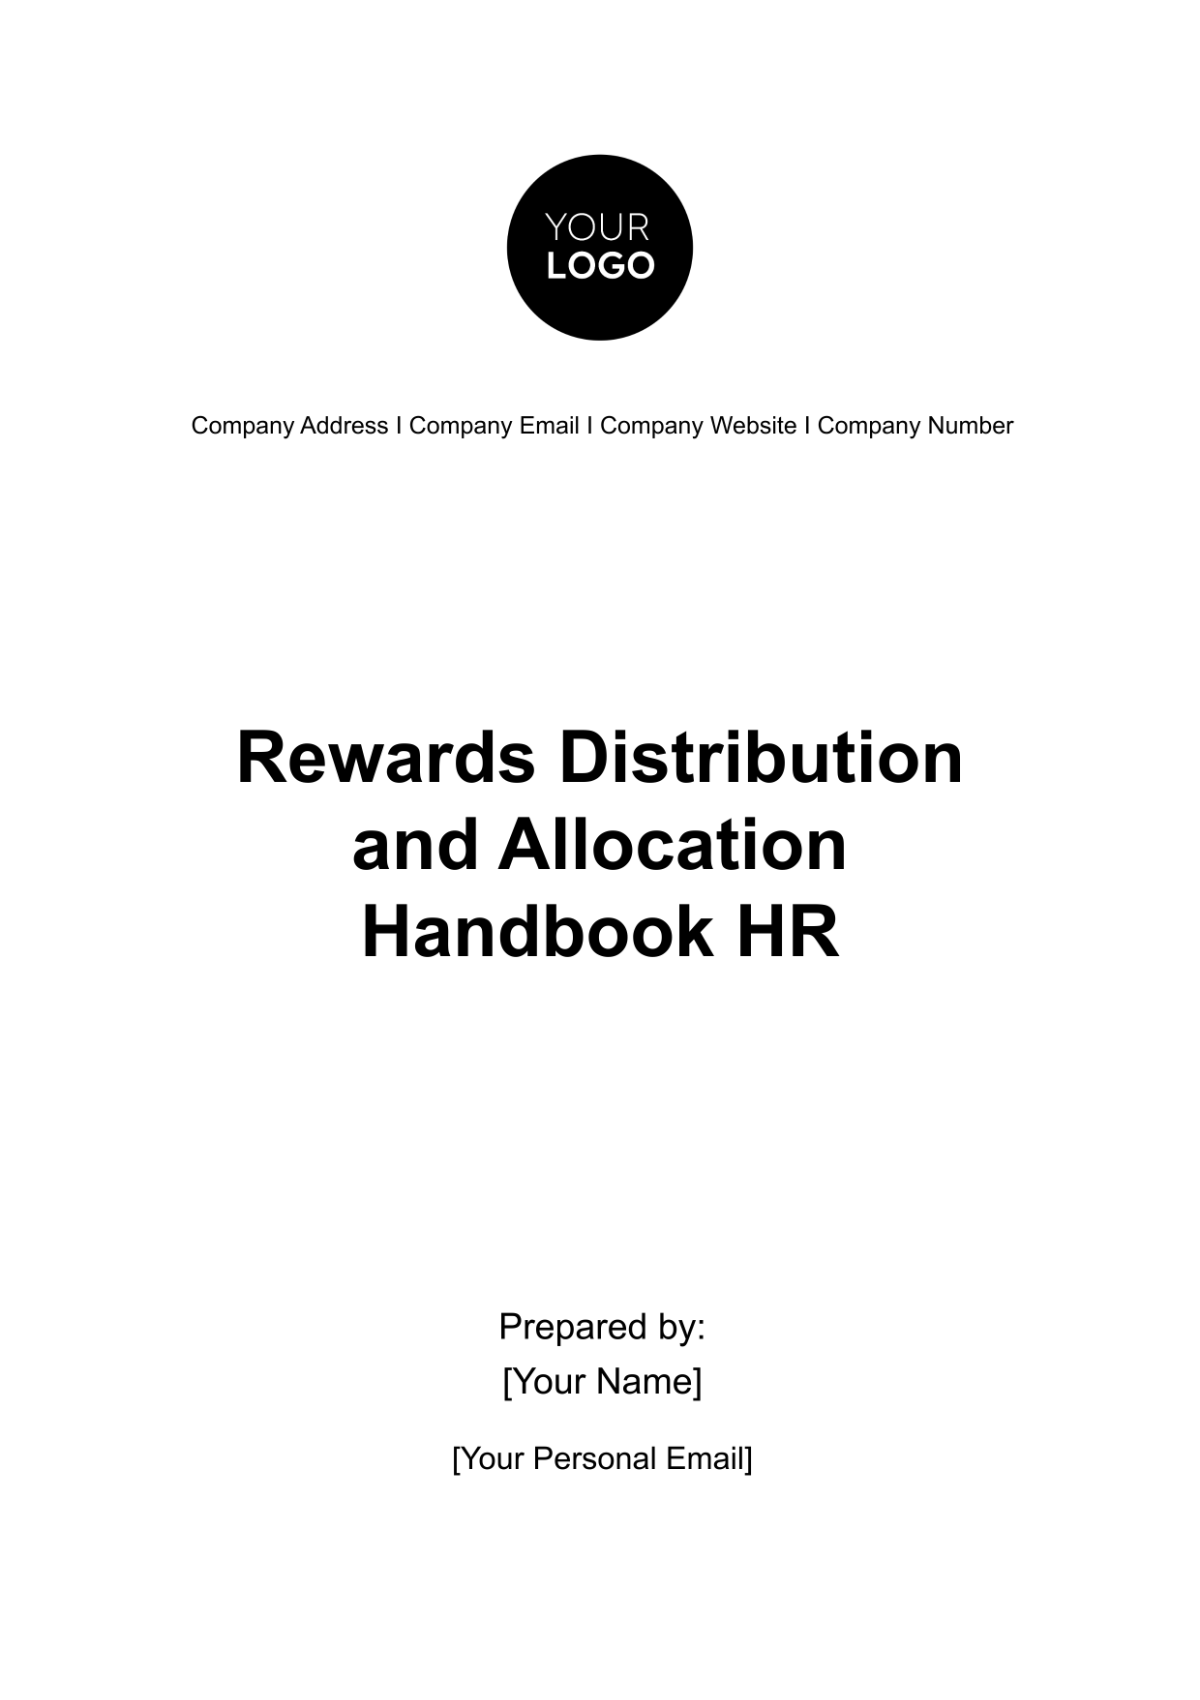 Free Rewards Distribution and Allocation Handbook HR Template